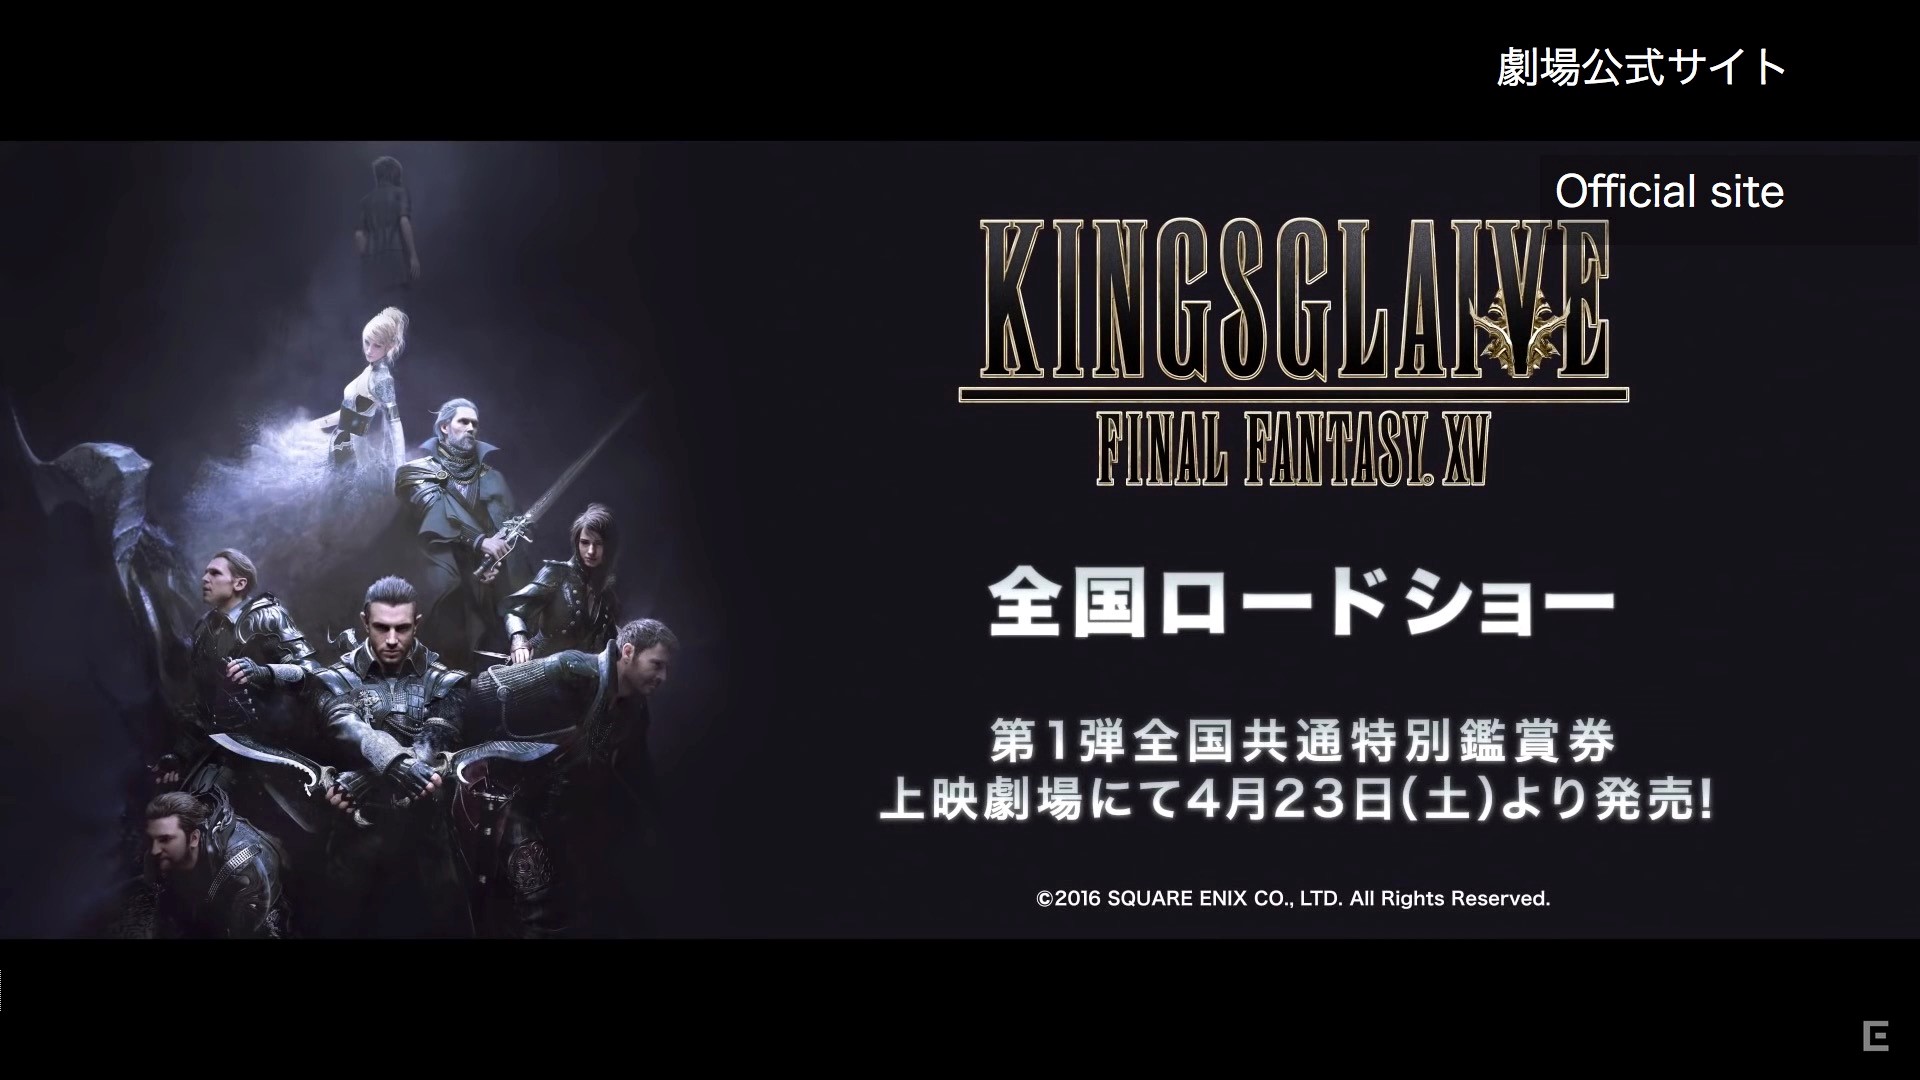 Ff15 劇場版 映画 全国43館公開 第1弾前売り券情報 Kingsglaive Final Fantasy Xv 公開日は7月9日 ゲームベース